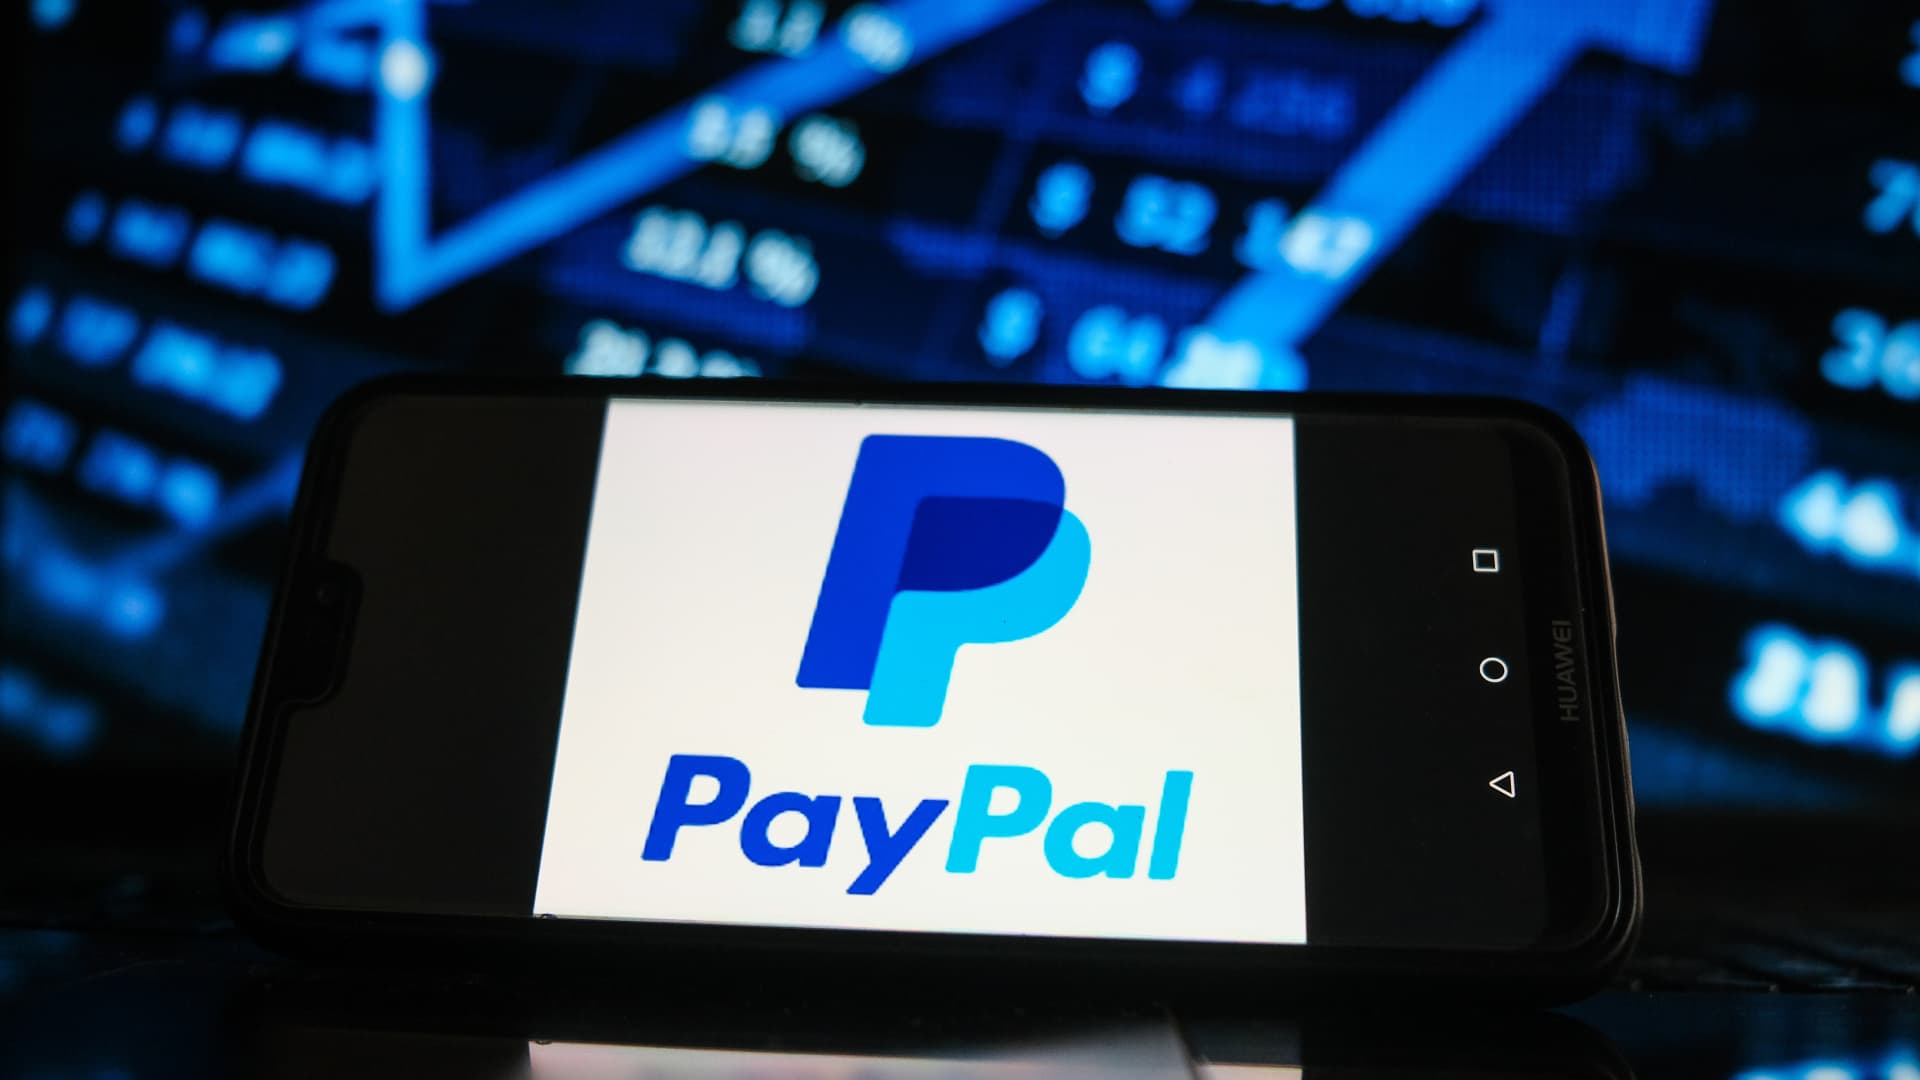 PayPal (PYPL) Q3 2022 earnings